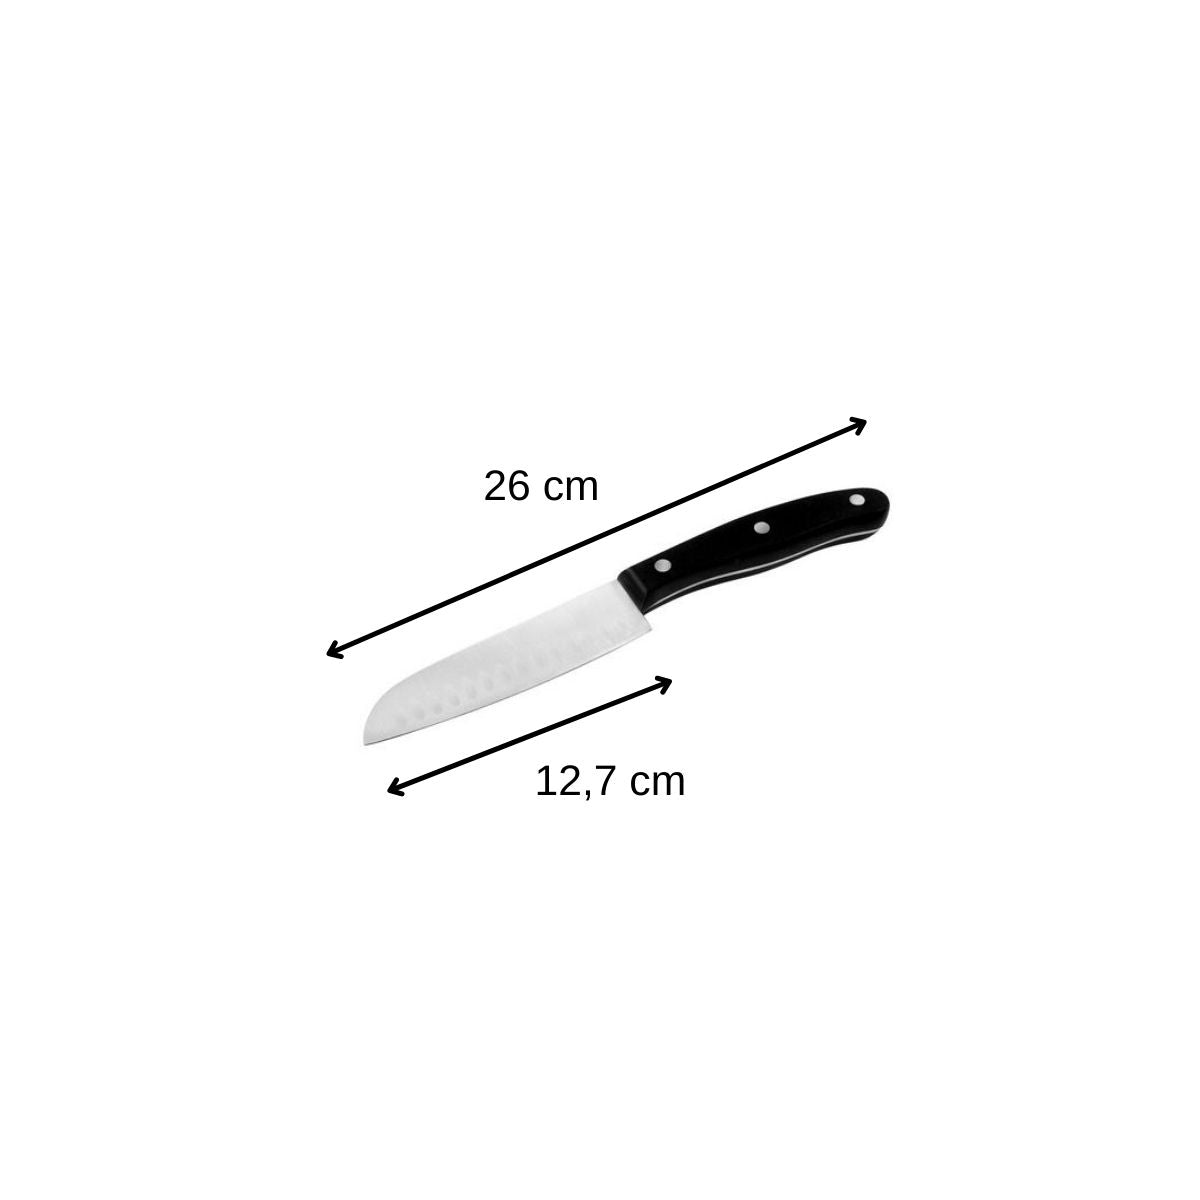 Couteau Santoku 26 cm Nirosta Fit